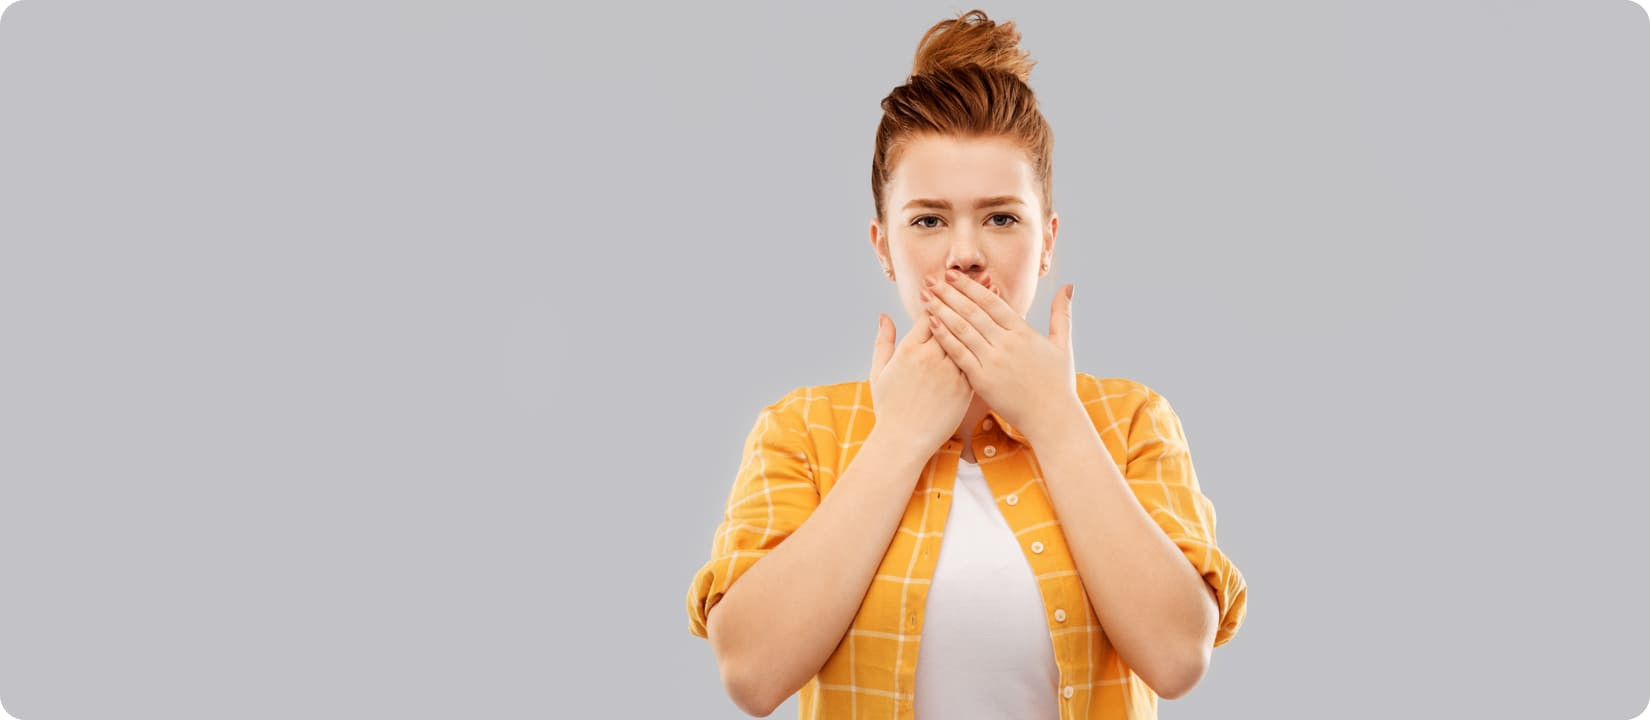 Галитоз - неприятный запах изо рта: лечение и причины